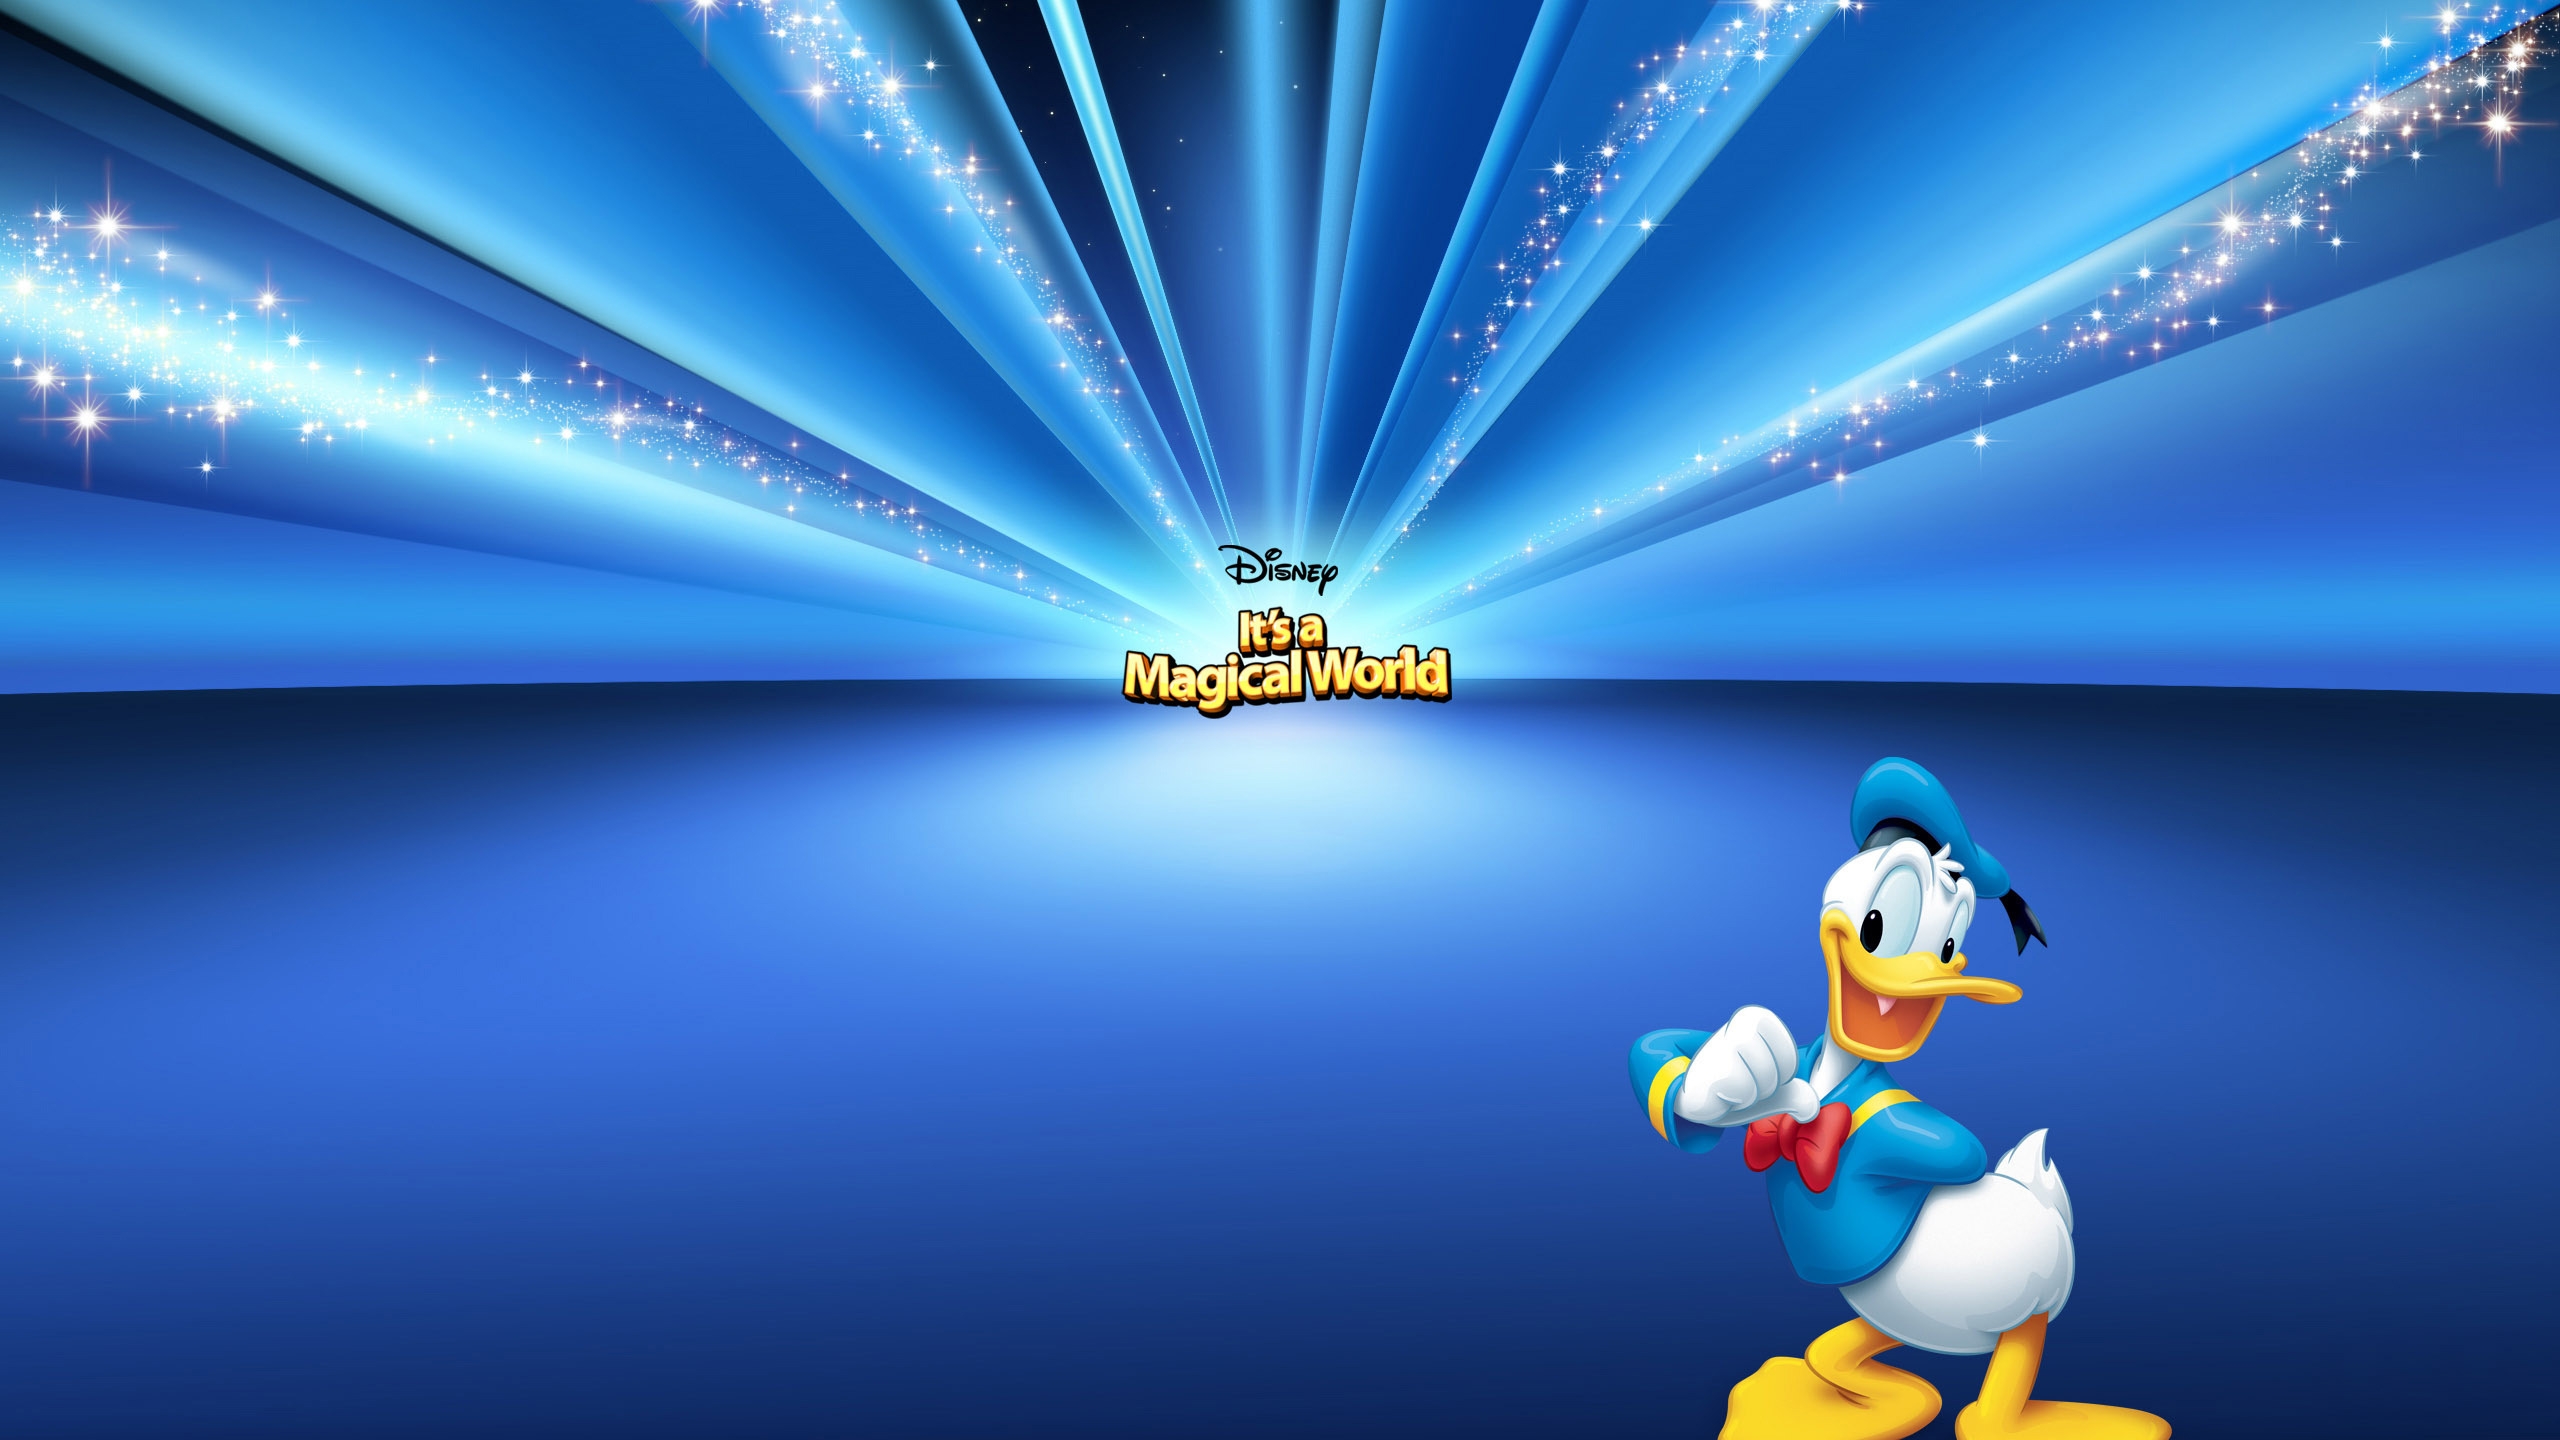 Donald Duck Cartoon for 2560x1440 HDTV resolution